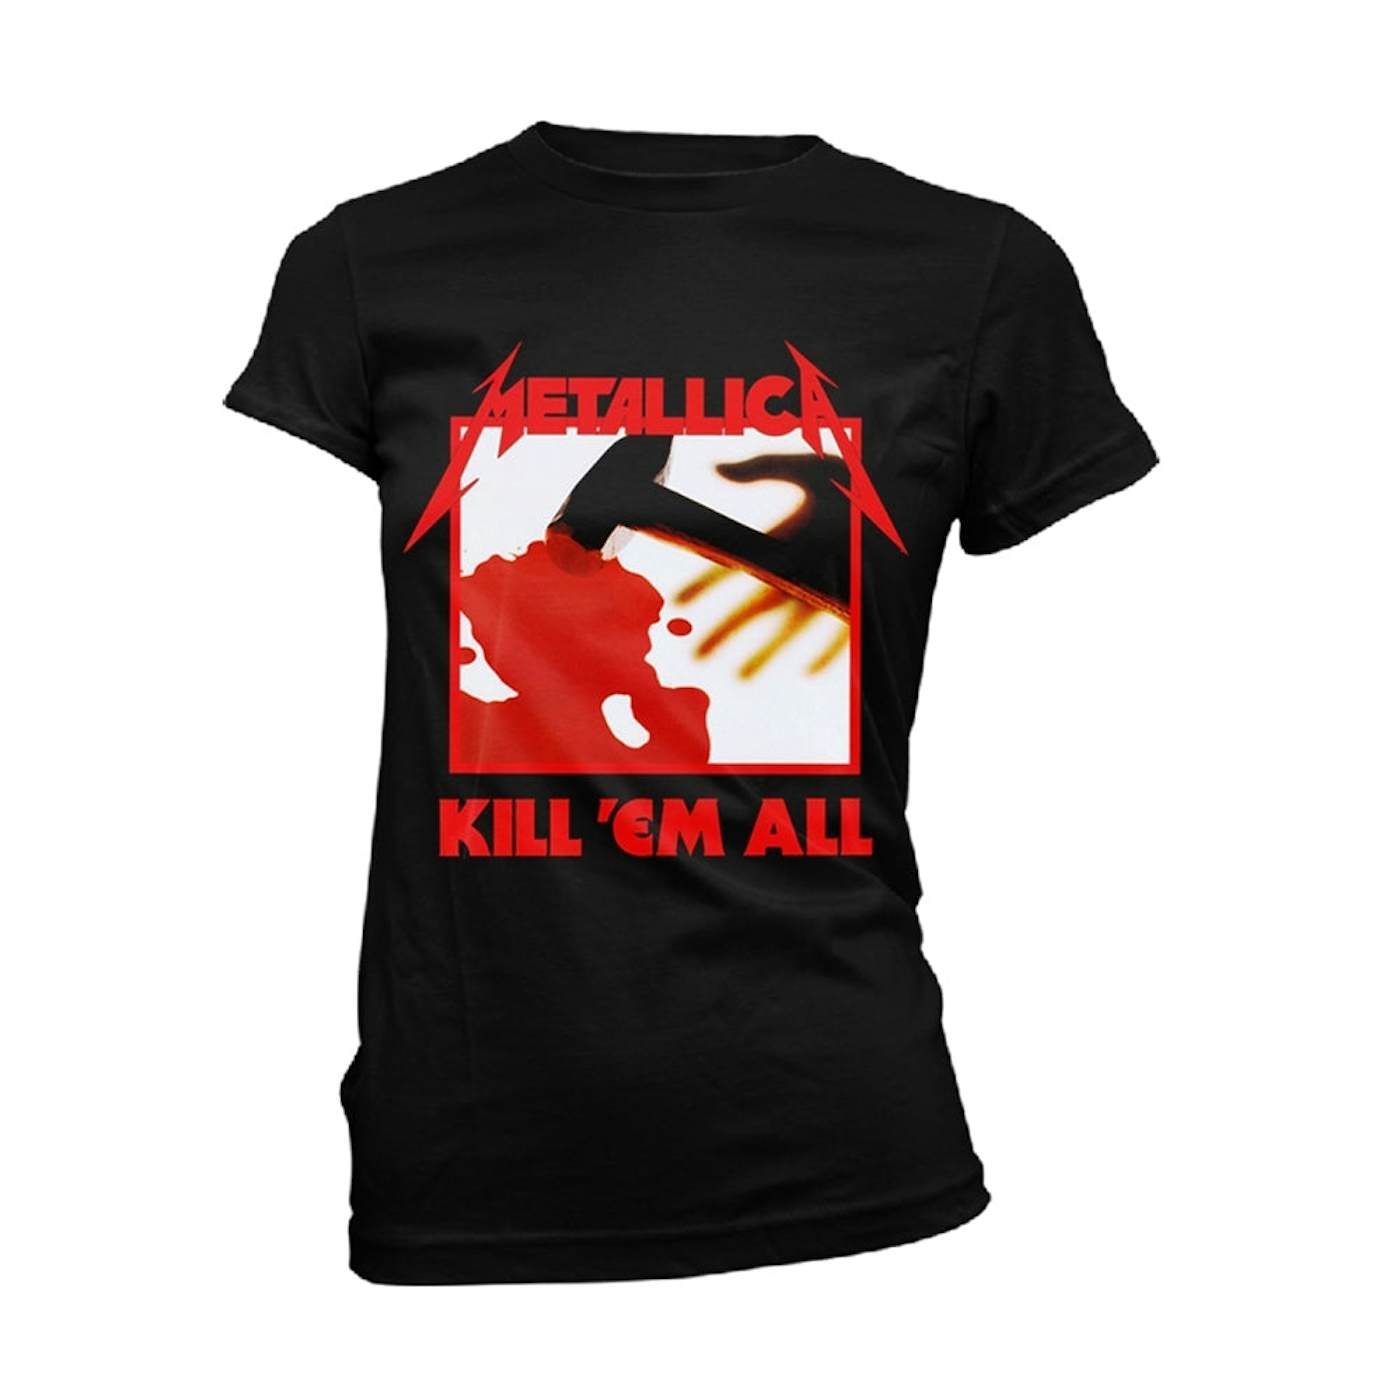 Metallica Women's T Shirt - Kill Em All Tracks (Black)